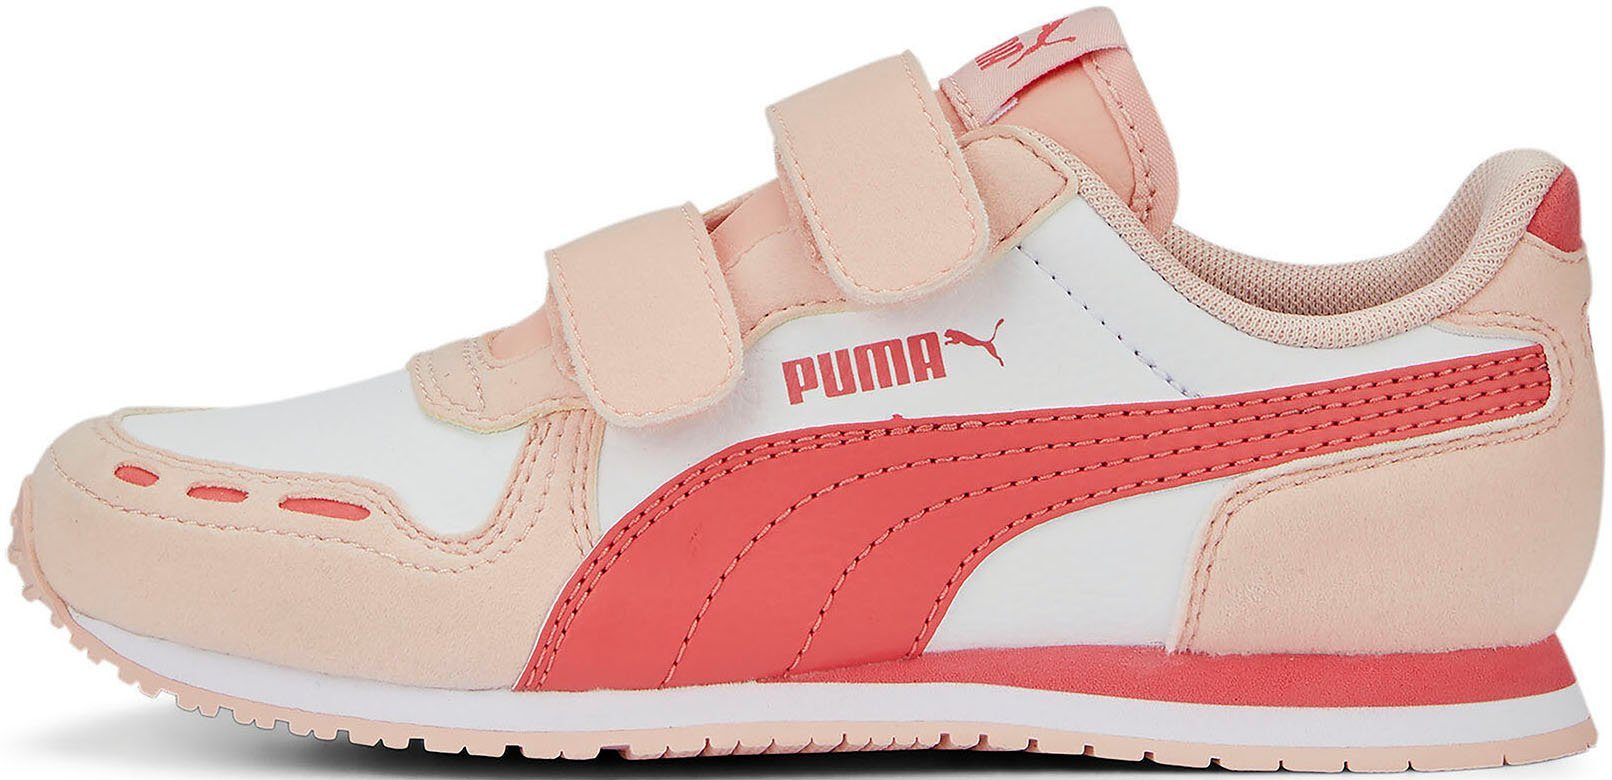 mit SL PS PUMA CABANA RACER rosa Sneaker Klettverschluss V 20